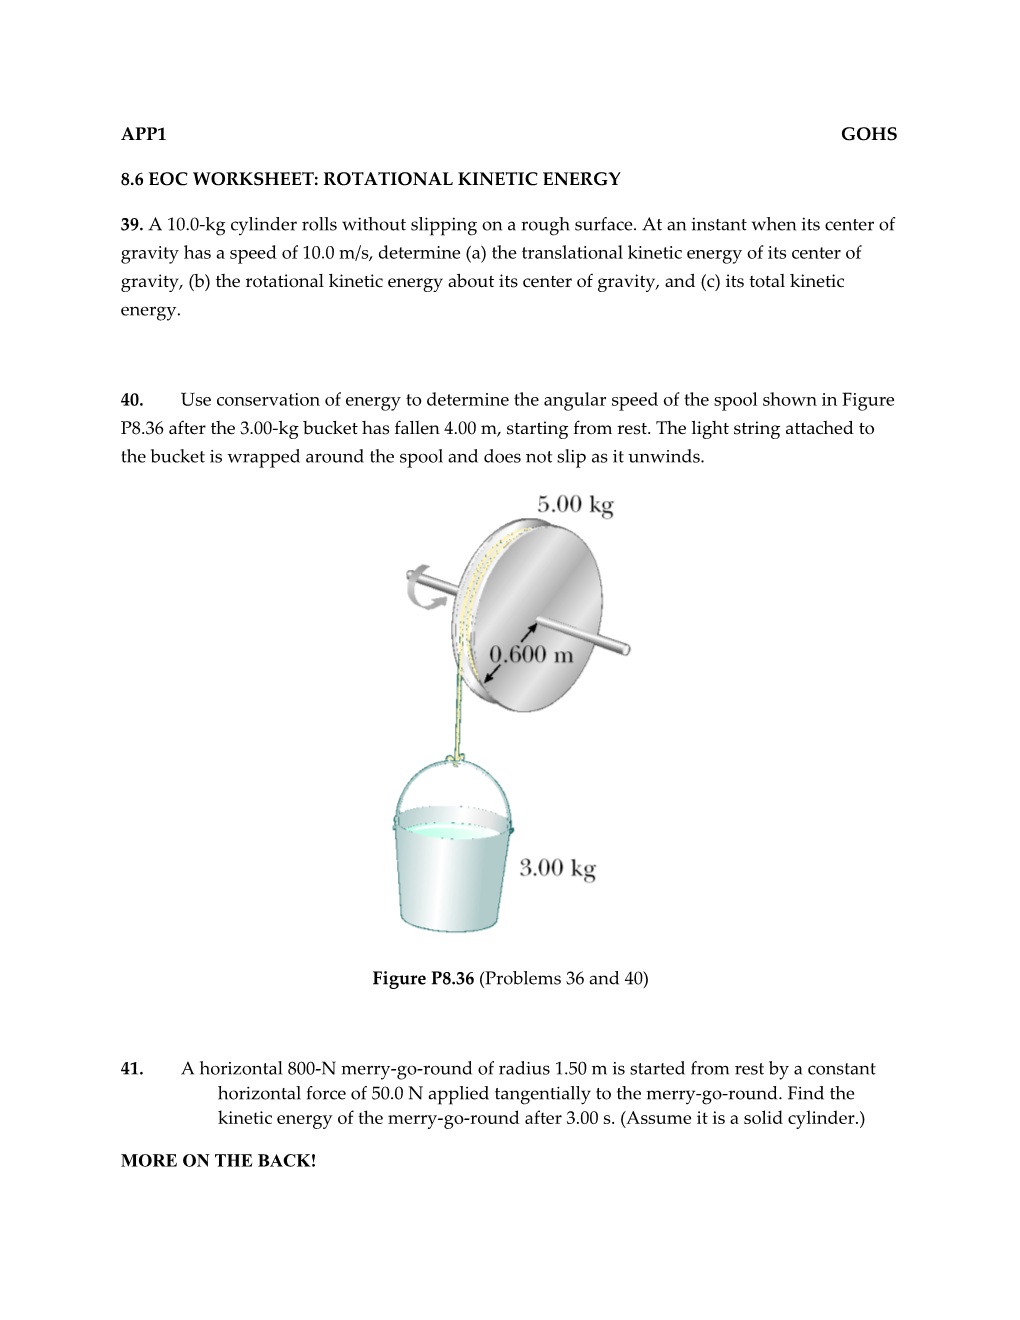 8.6 Eoc Worksheet: Rotational Kinetic Energy